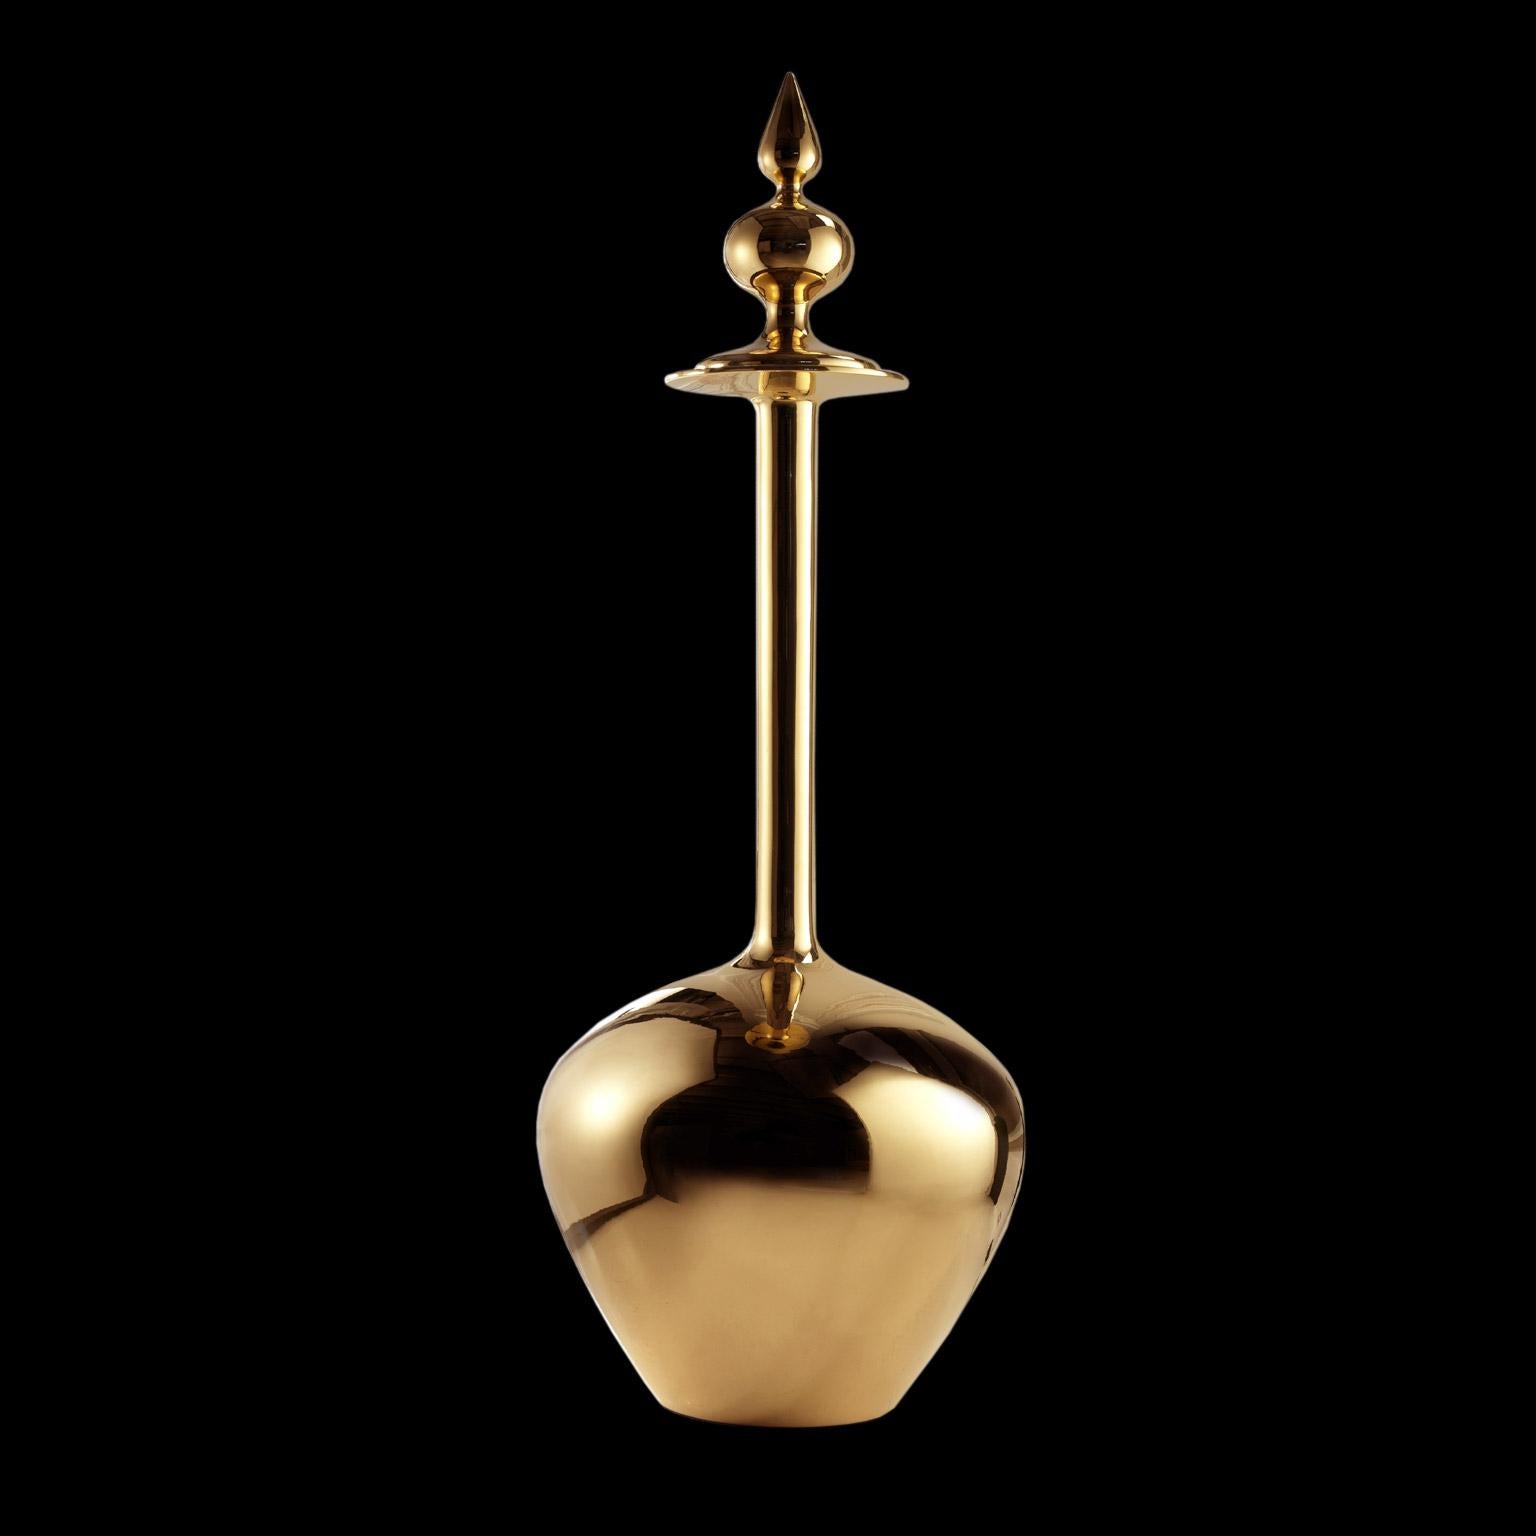 Ceramic vase CHANELLE
cod. CH070
handcrafted in 24-karat gold 

Measures: 
H. 165.0 cm. 
Dm. 60.0 cm.